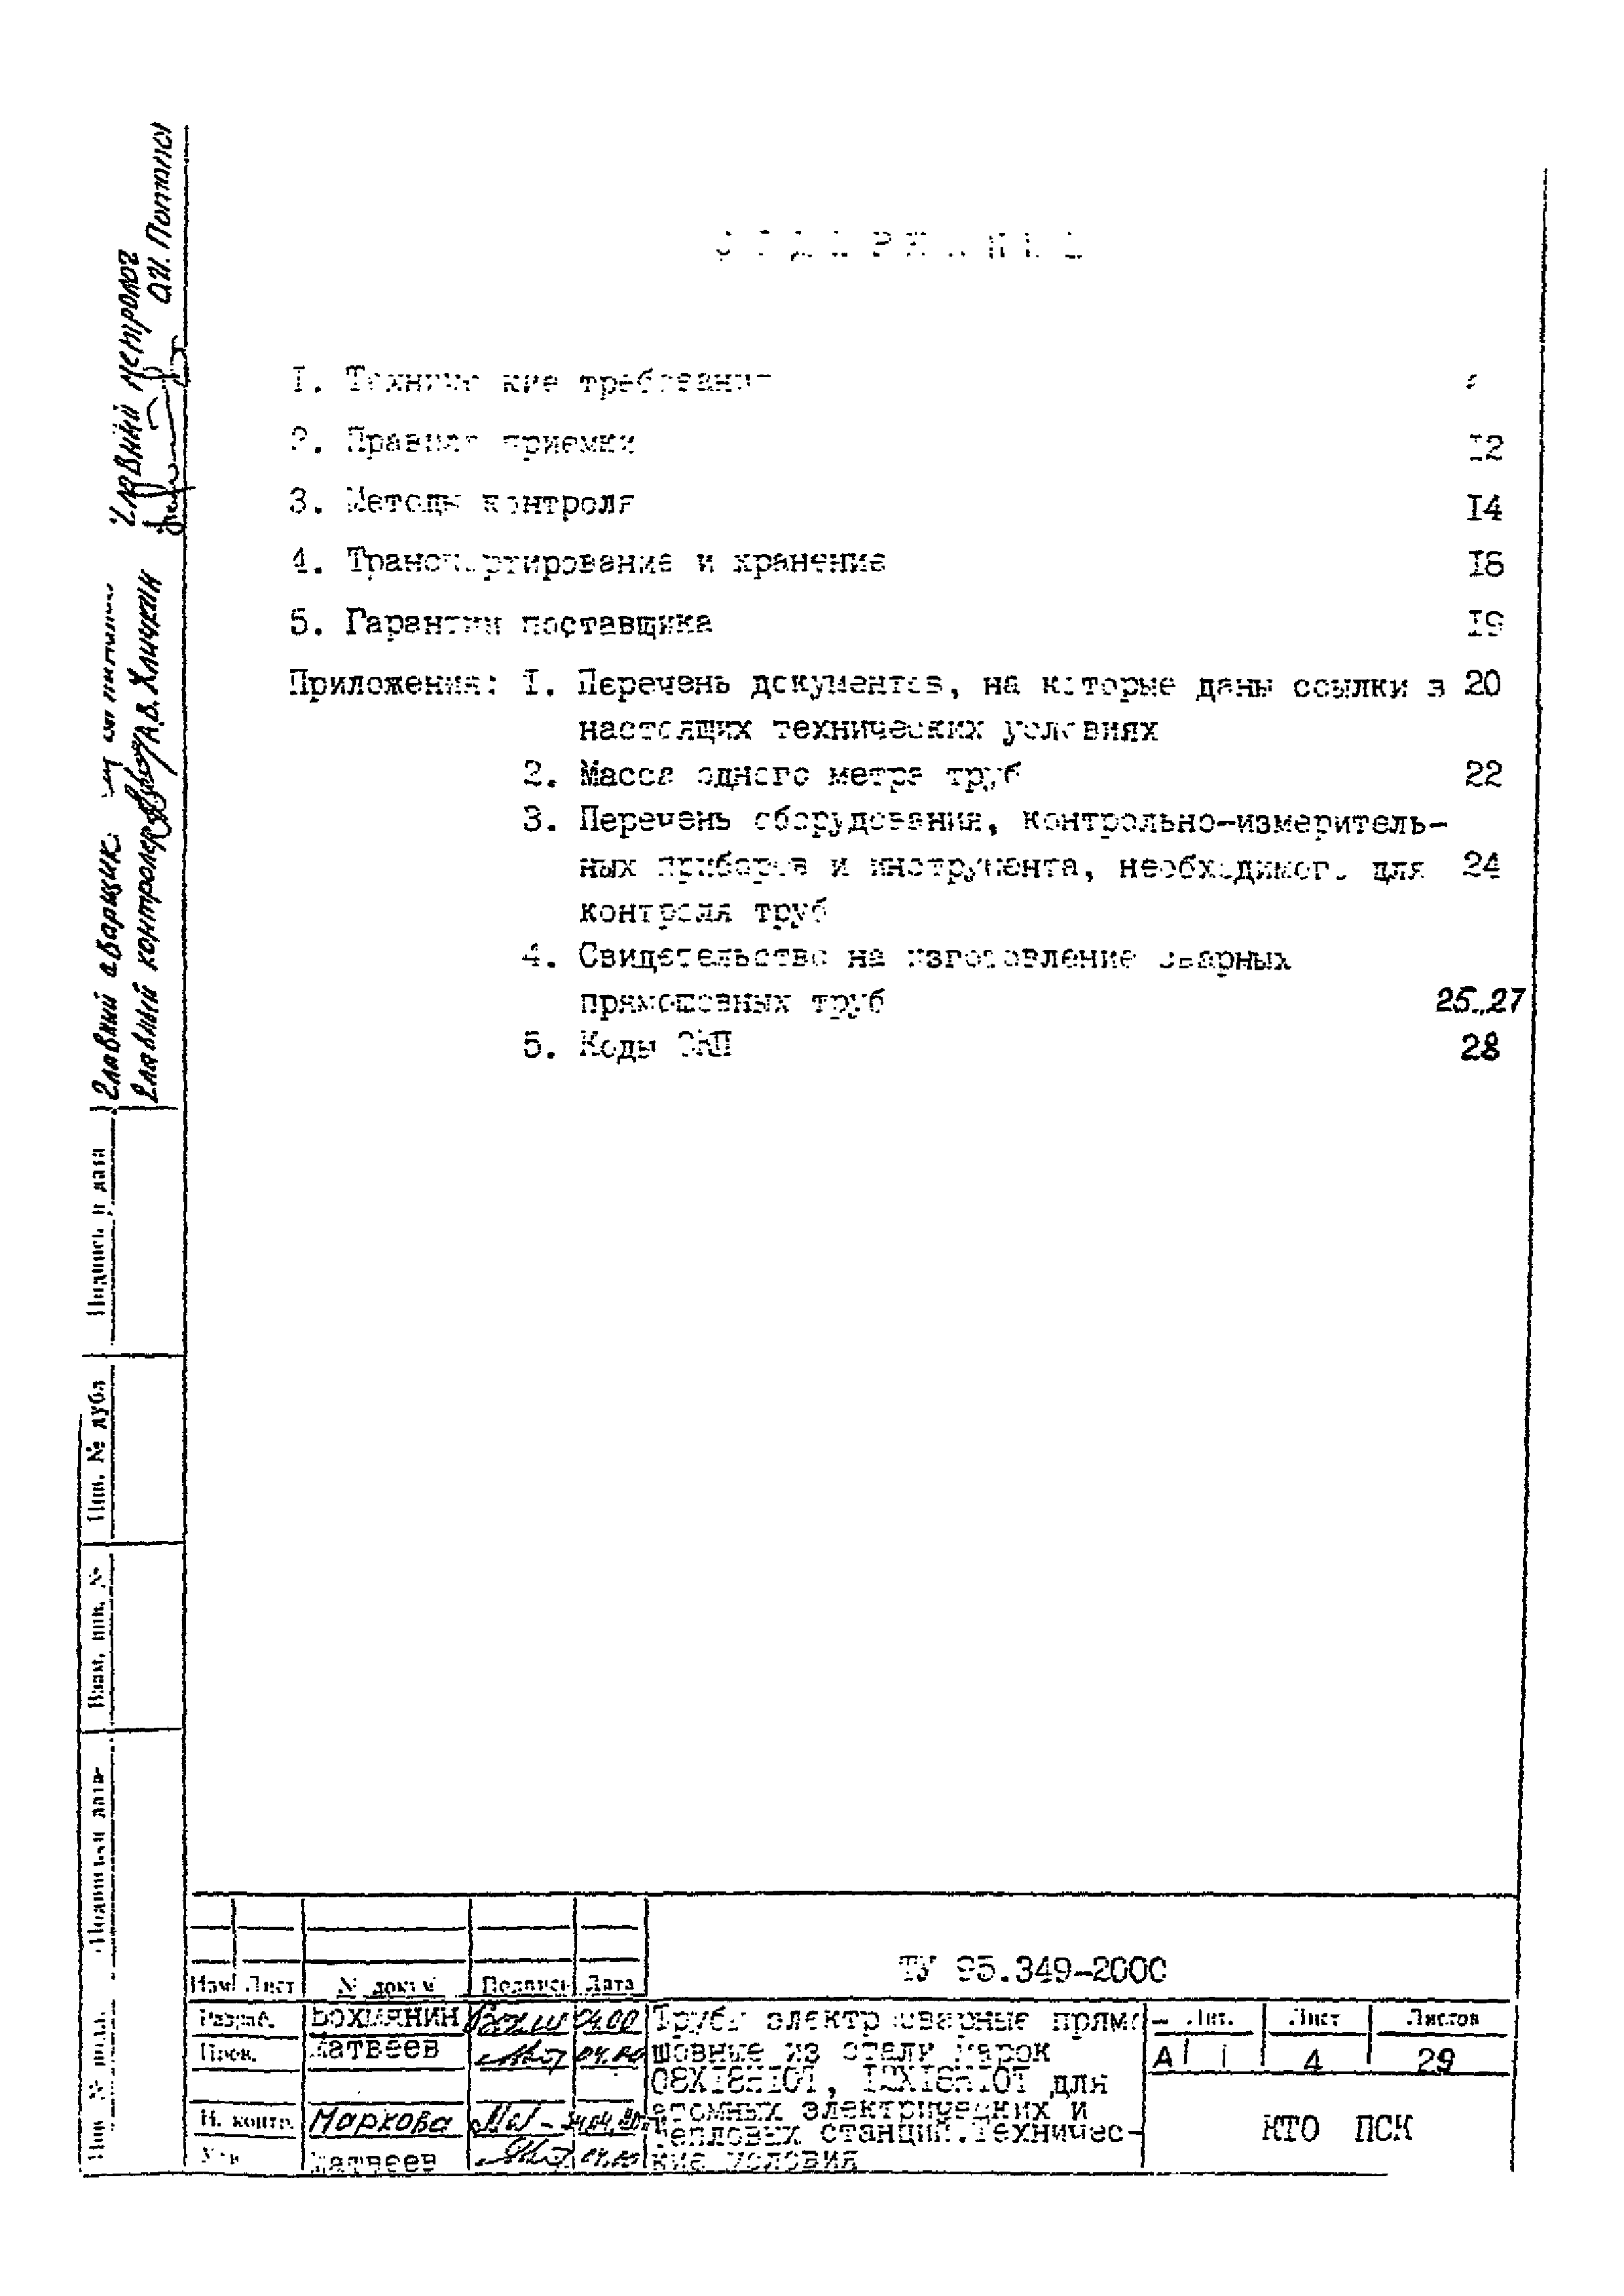 ТУ 95.349-2000